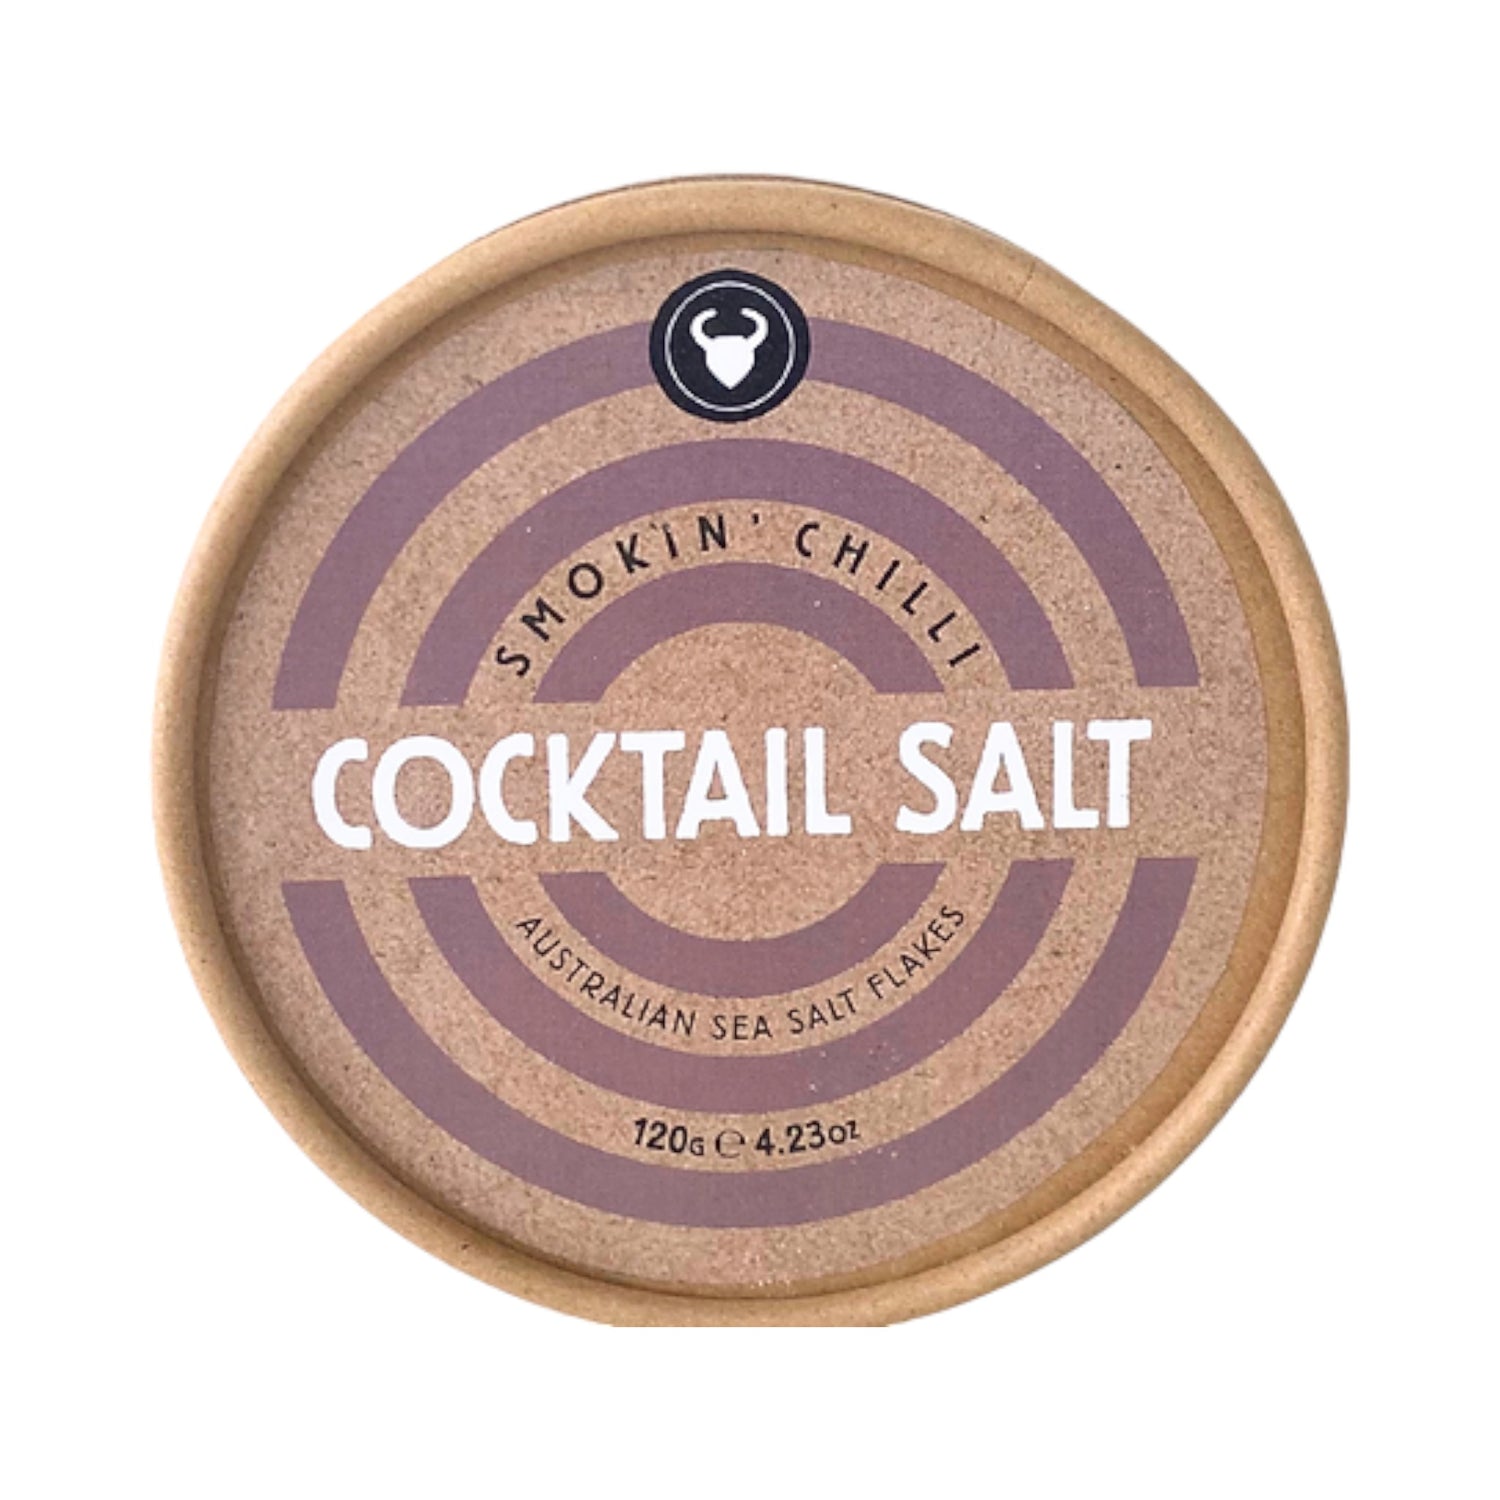 Smokin Chilli Cocktail Salt 120g